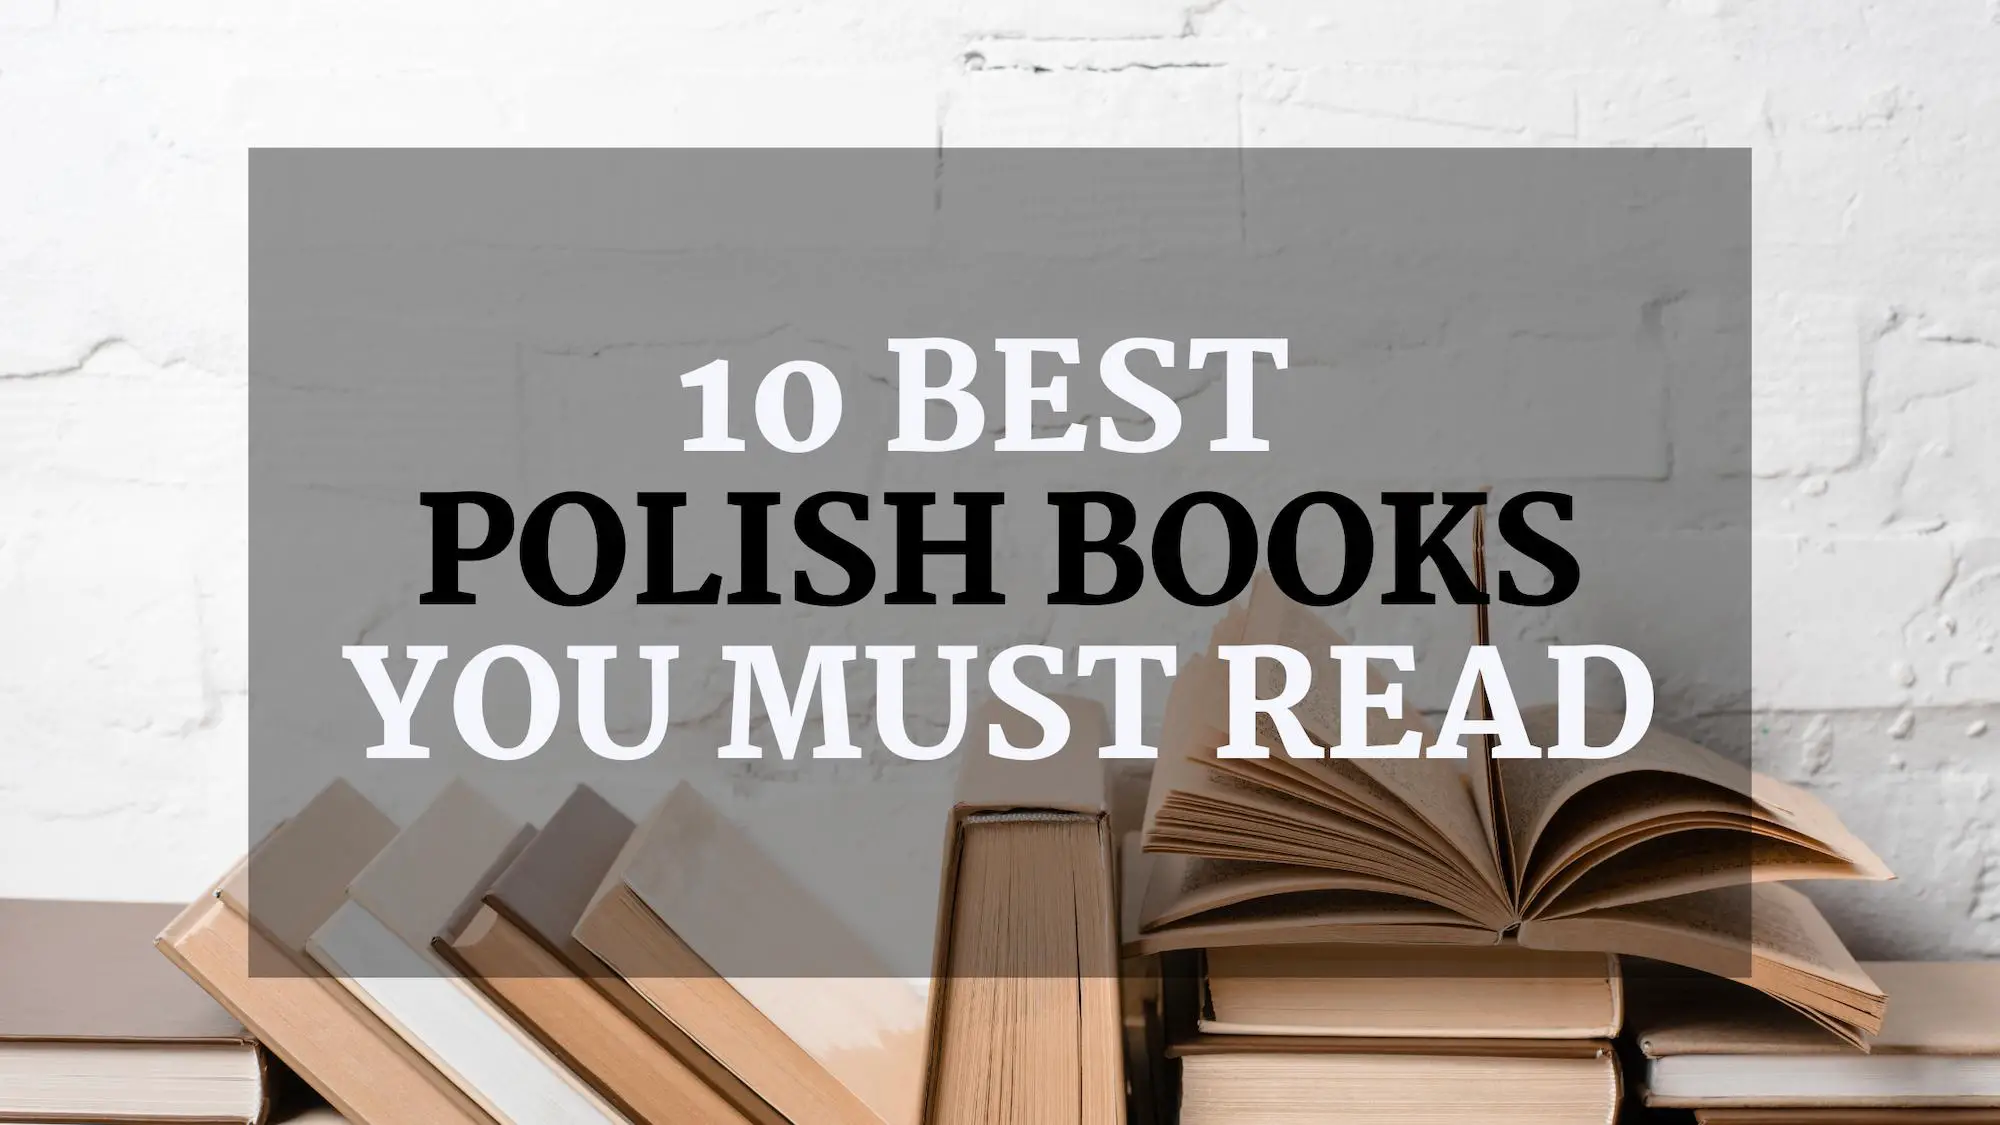 Best Polish Books